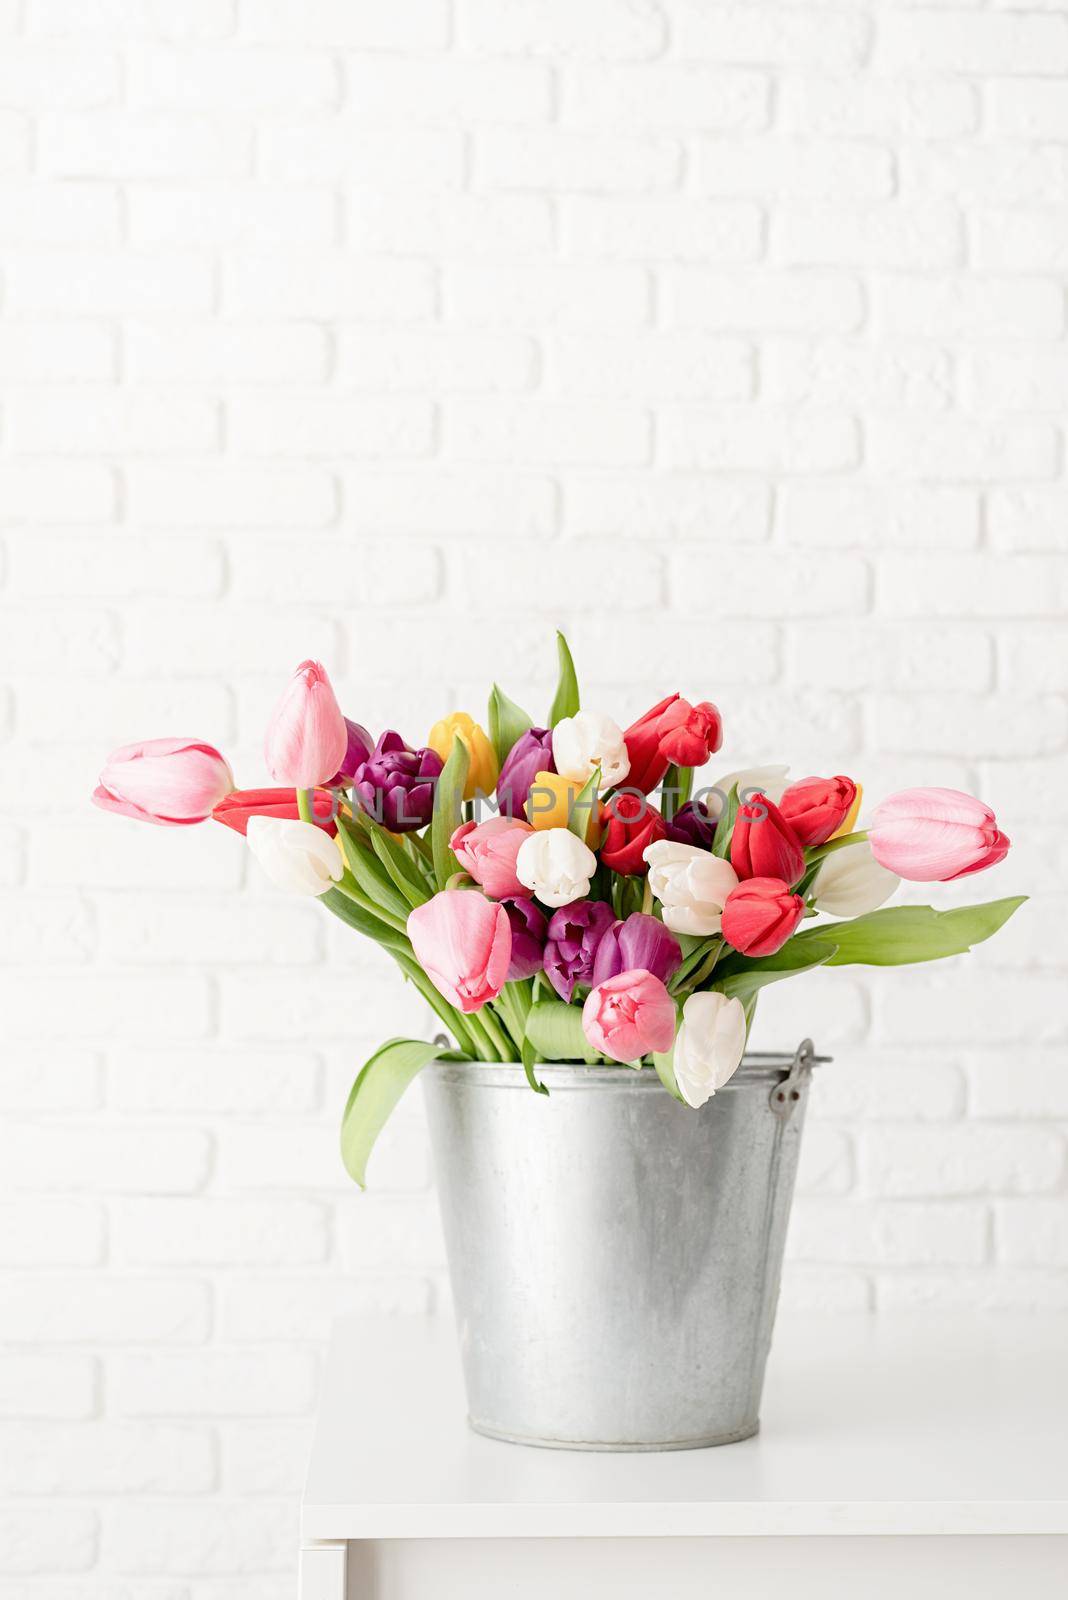 Bucket of tulip flowers over white brick wall background by Desperada